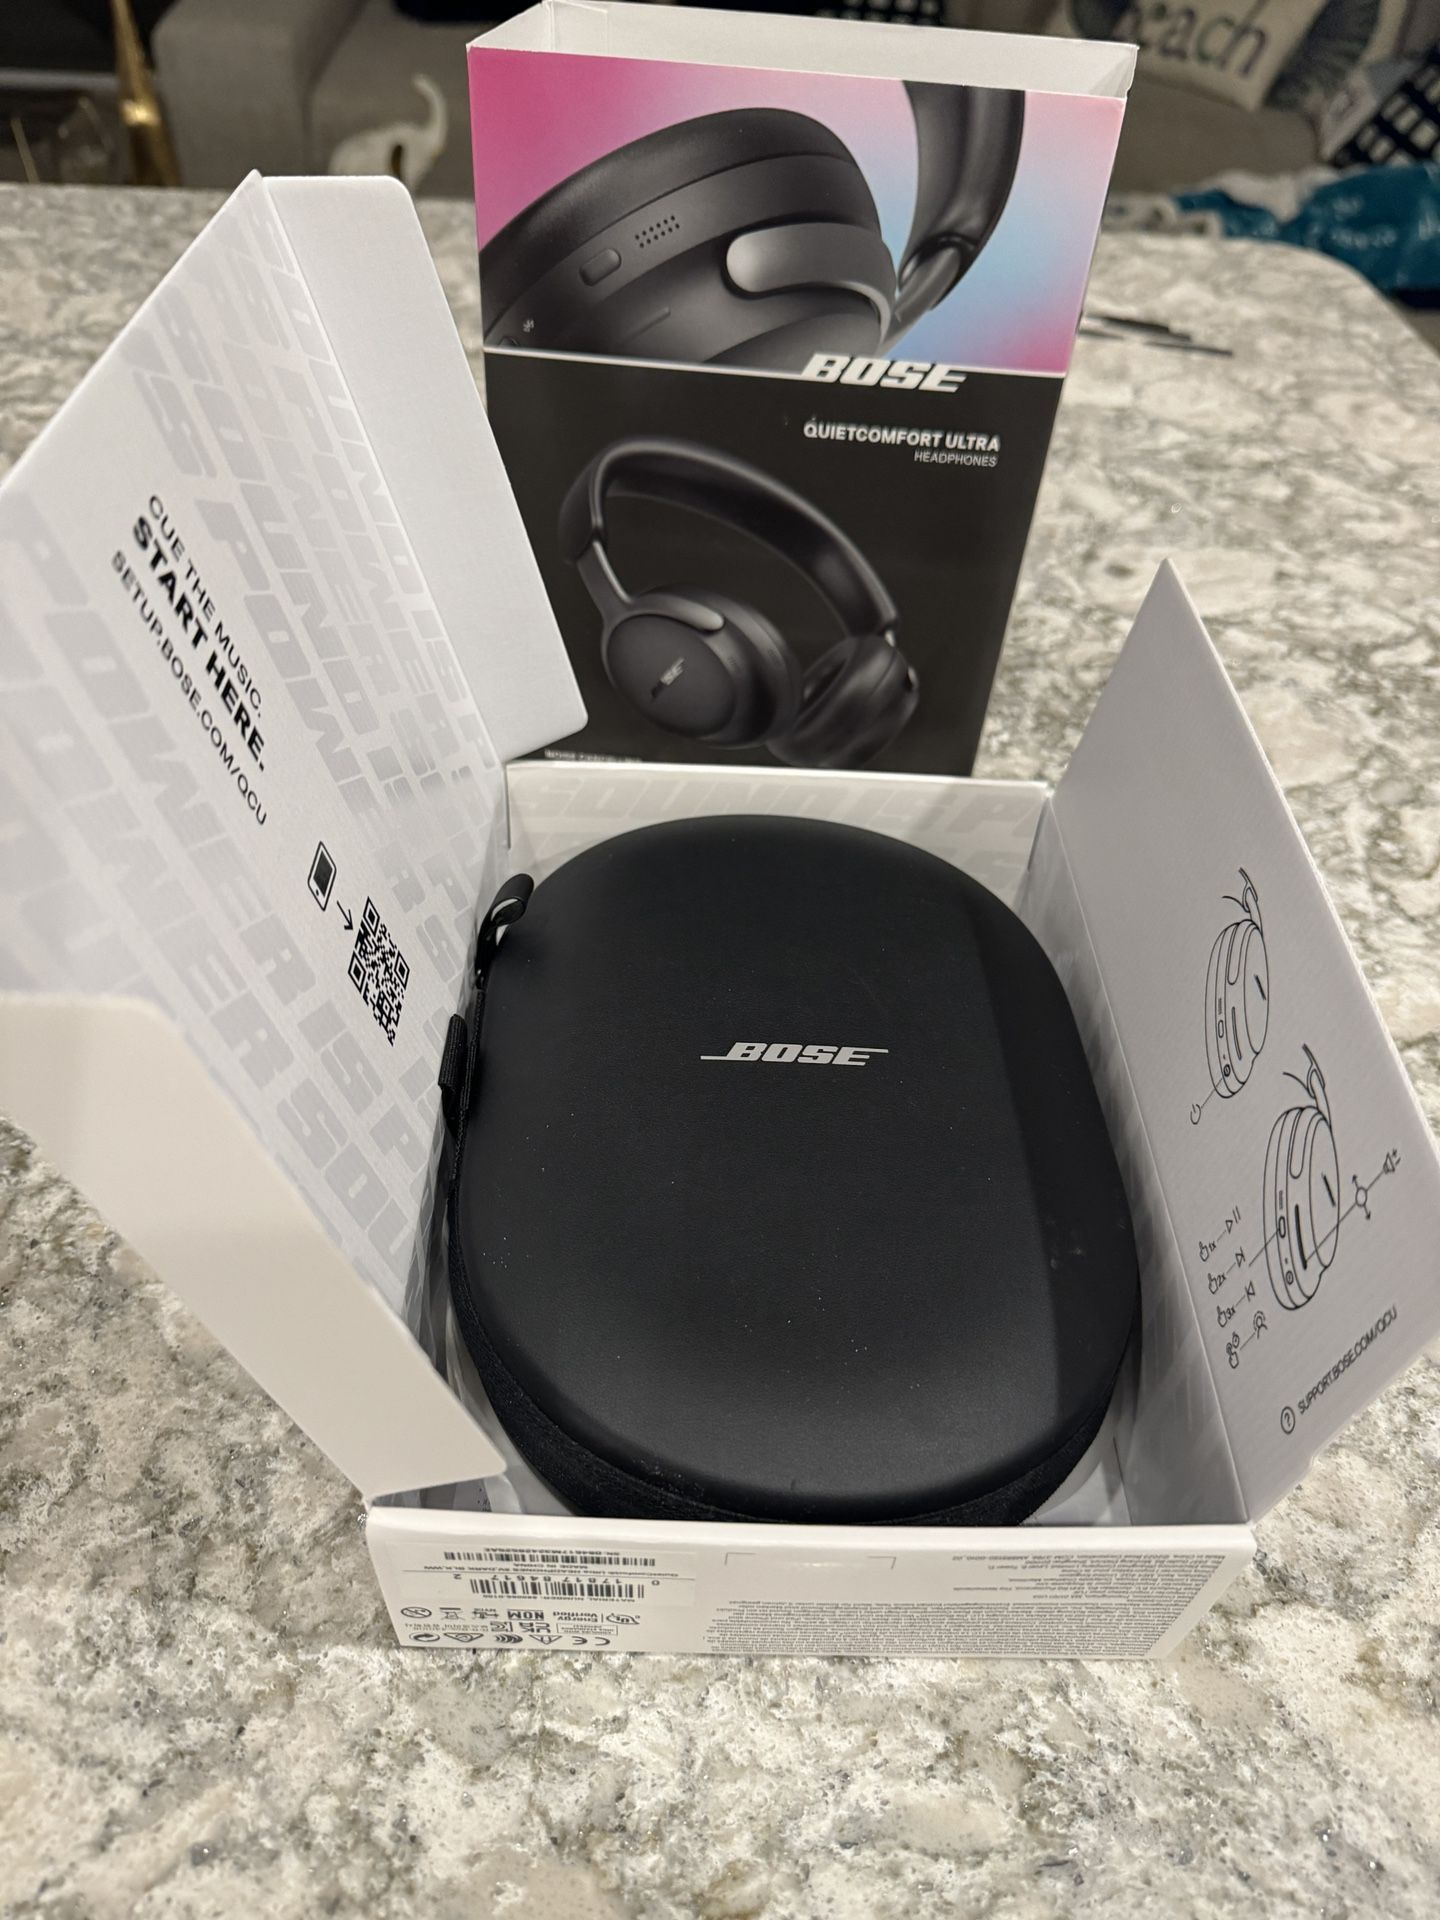 Bose quietcomfort ultra (latest Bose release) headphones